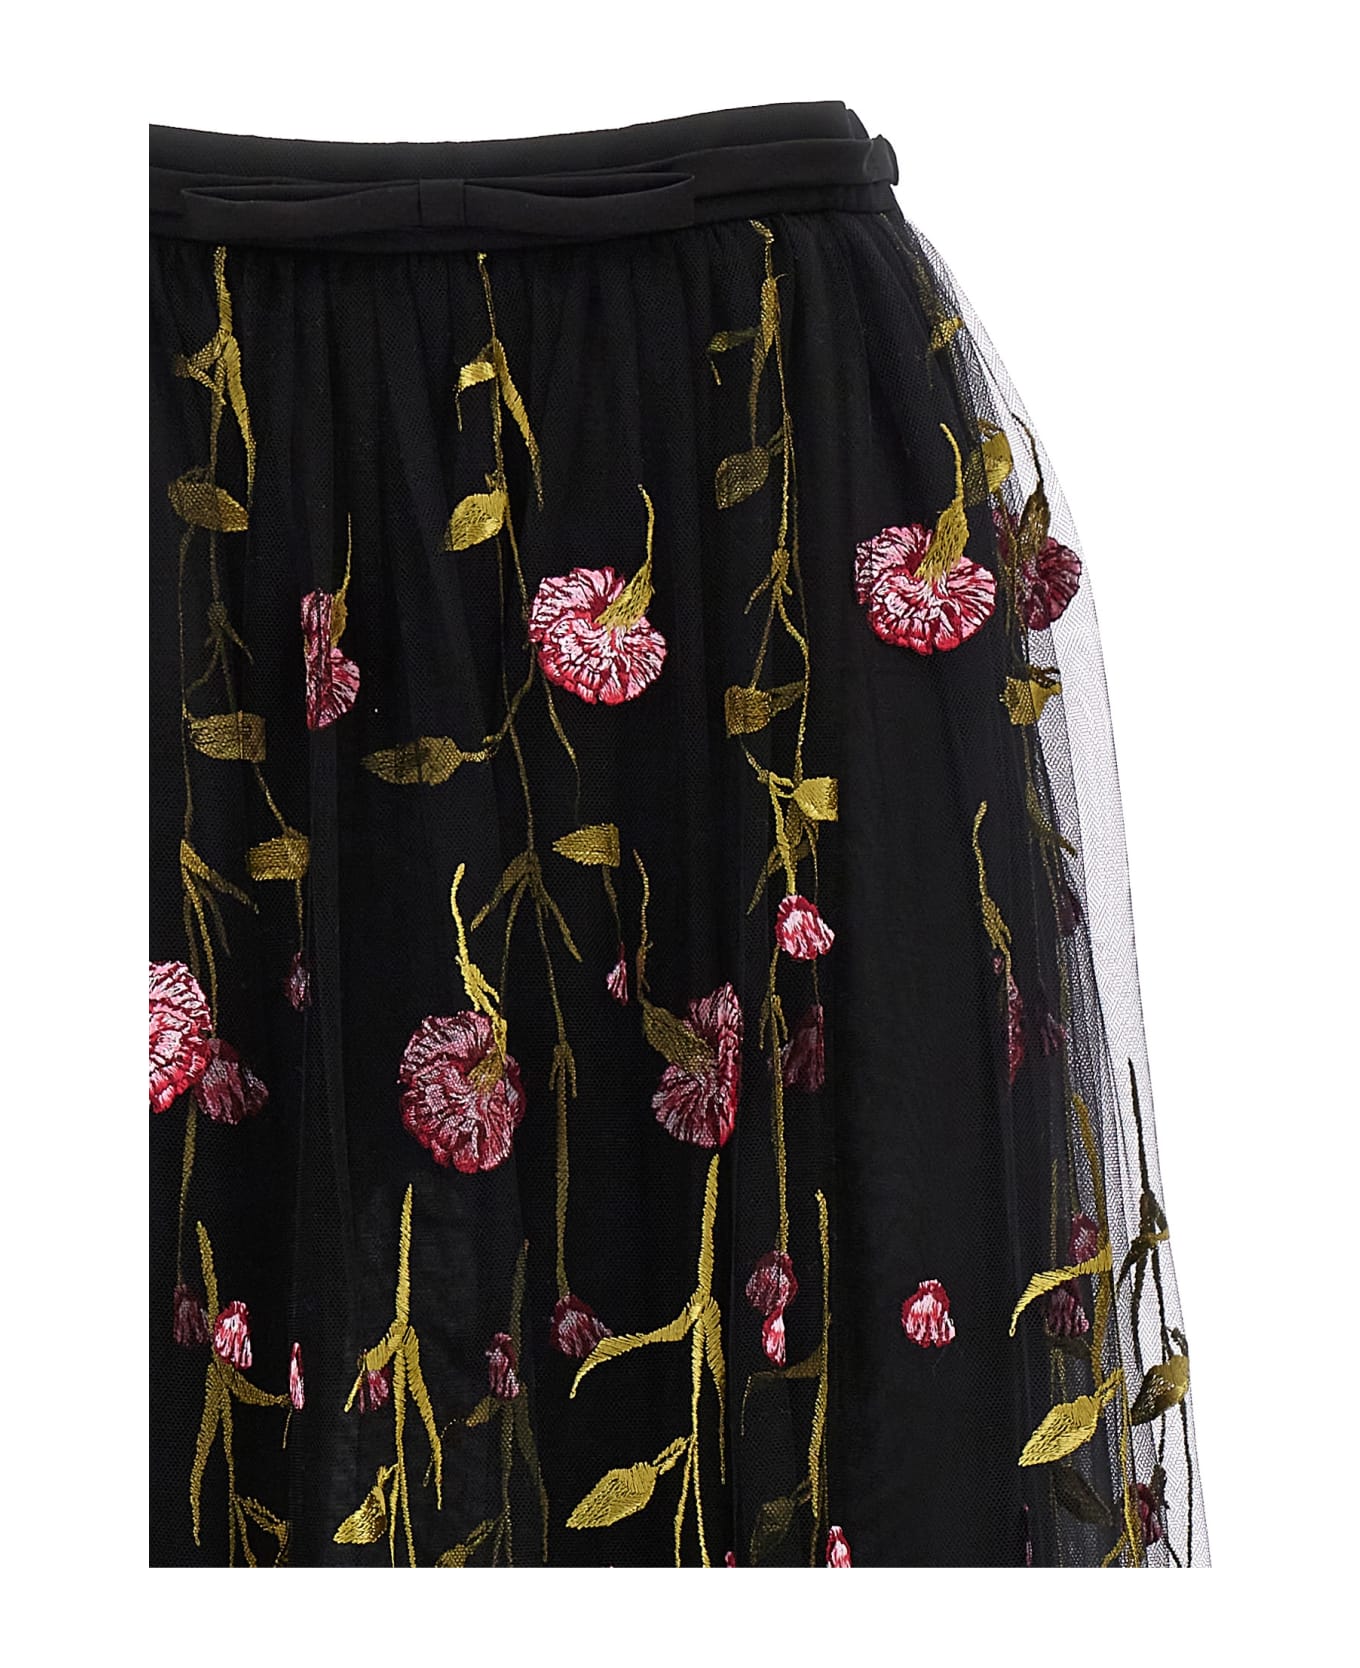 Giambattista Valli Floral Embroidery Skirt - Multicolor スカート